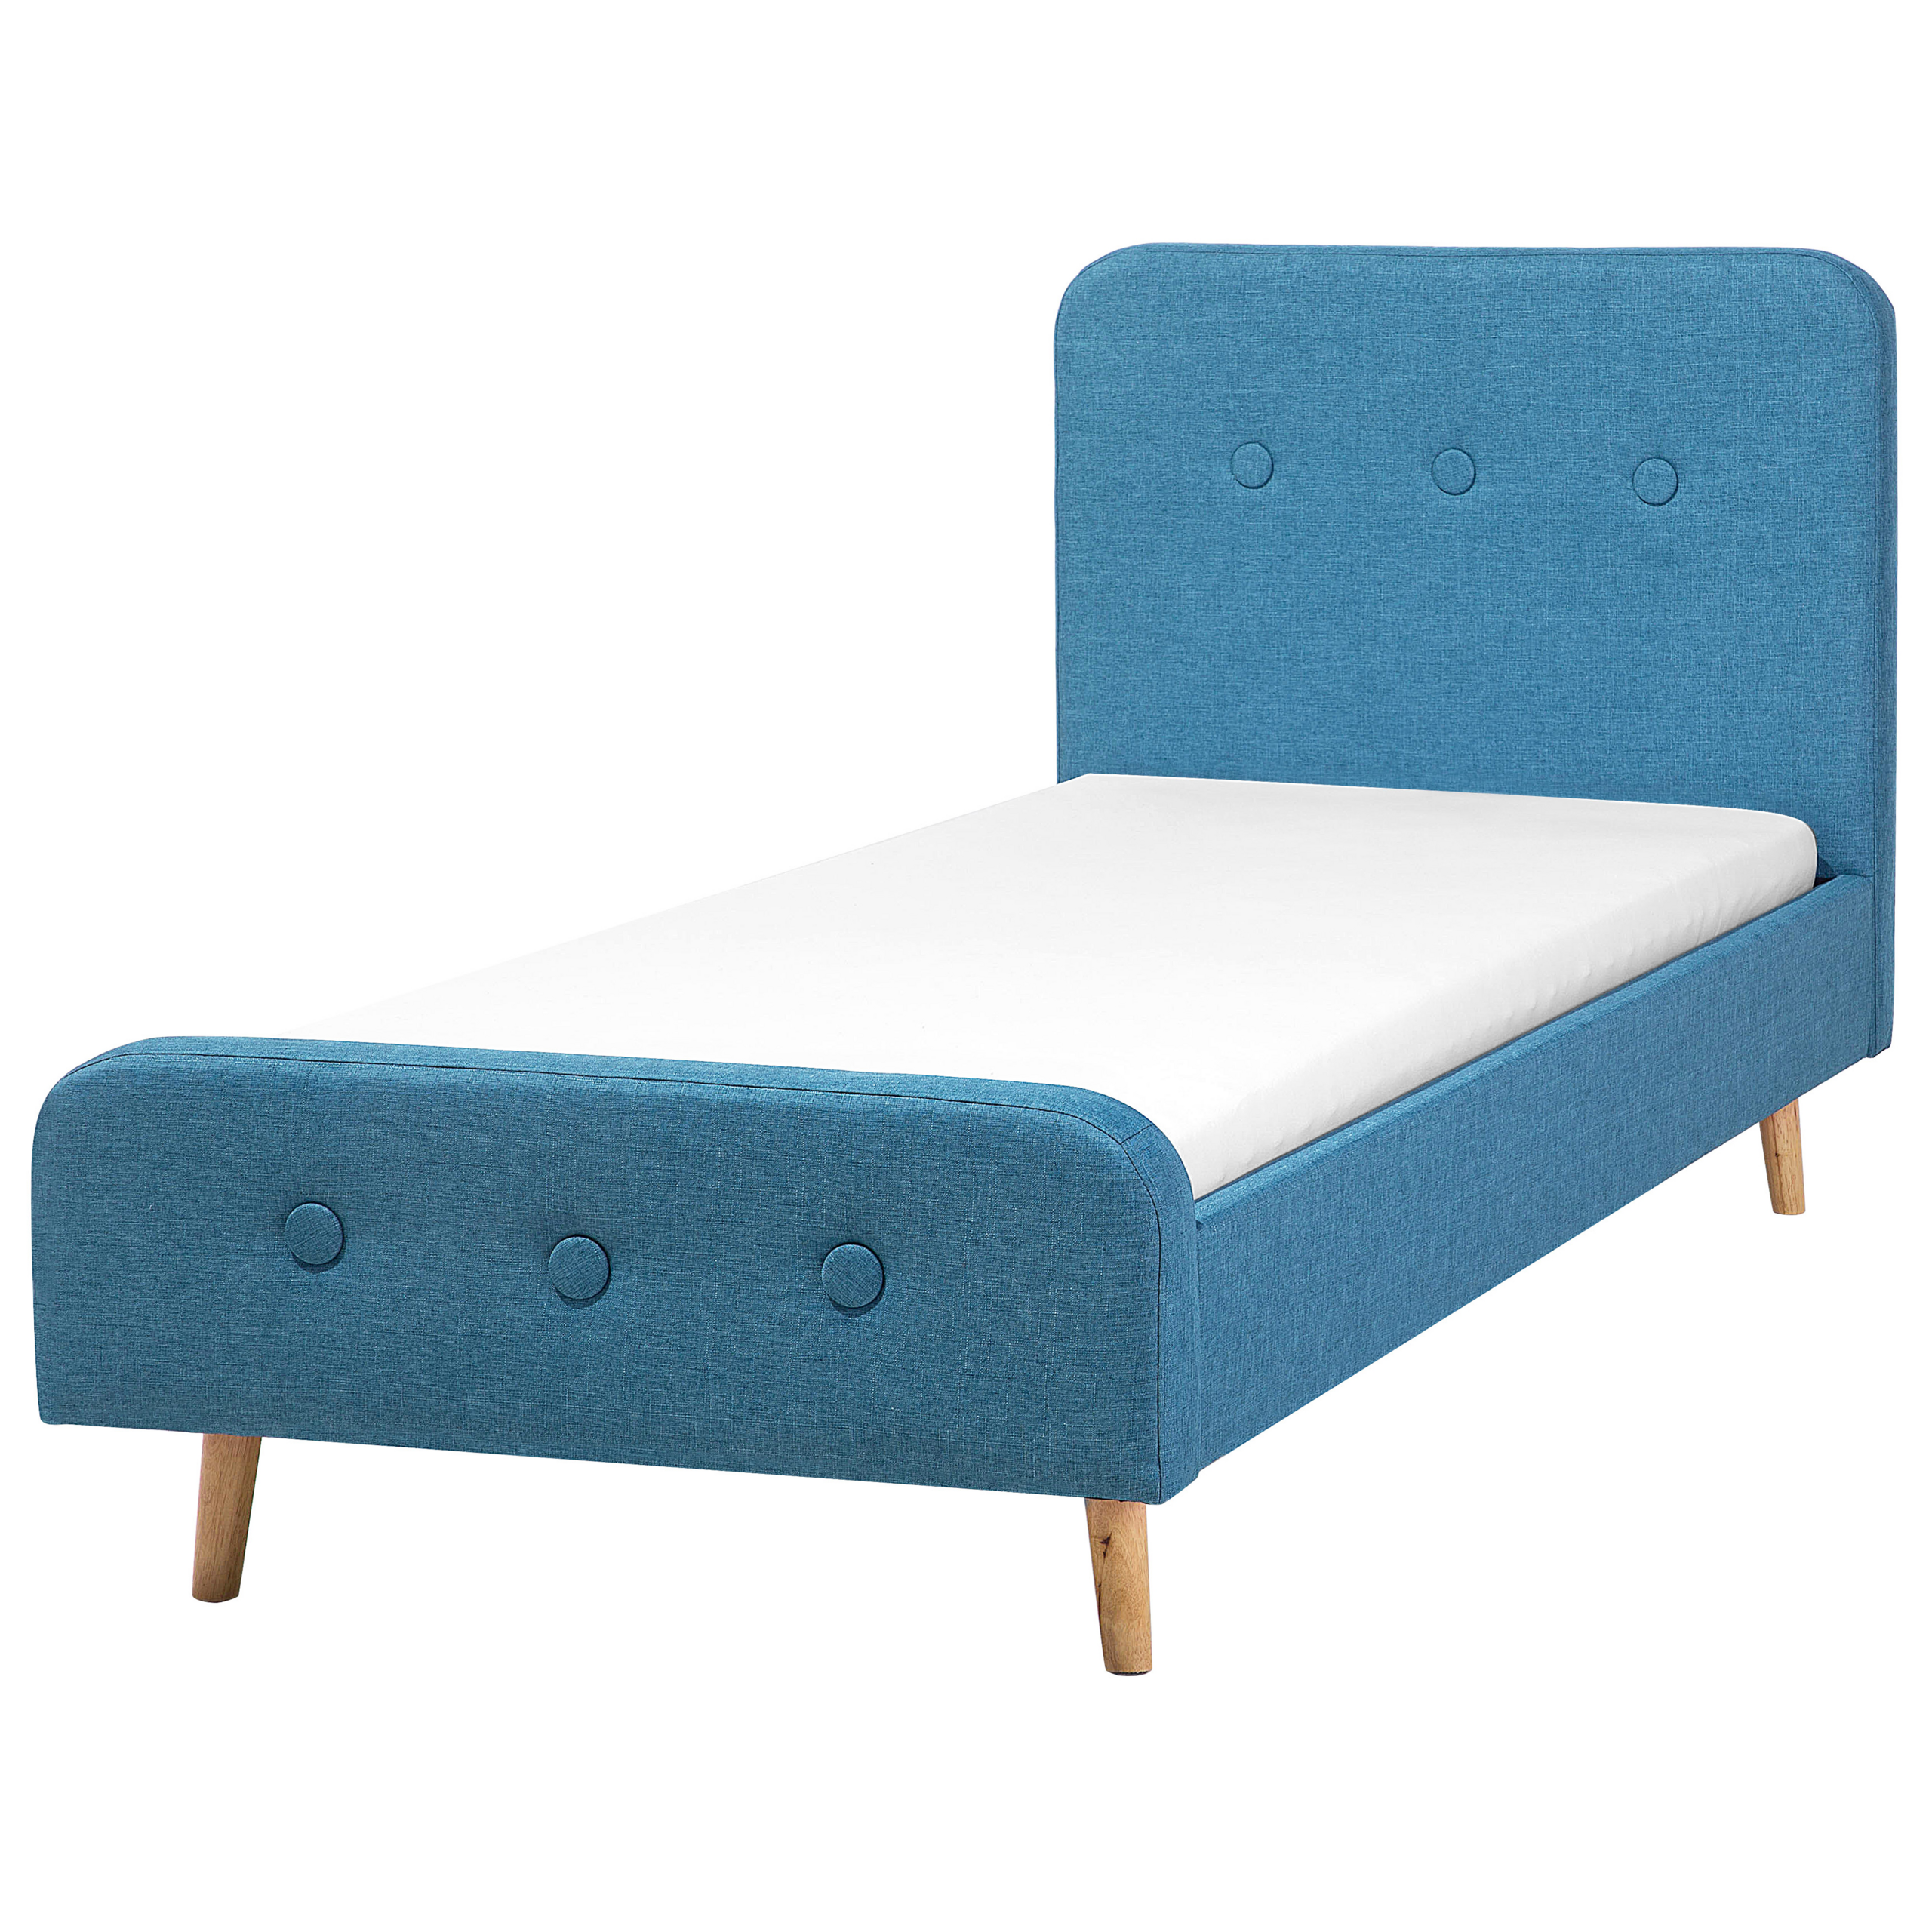 Beliani Slatted Bed Frame Dark Blue Polyester Fabric Upholstered Wooden Legs 3ft EU Single Size Modern Design